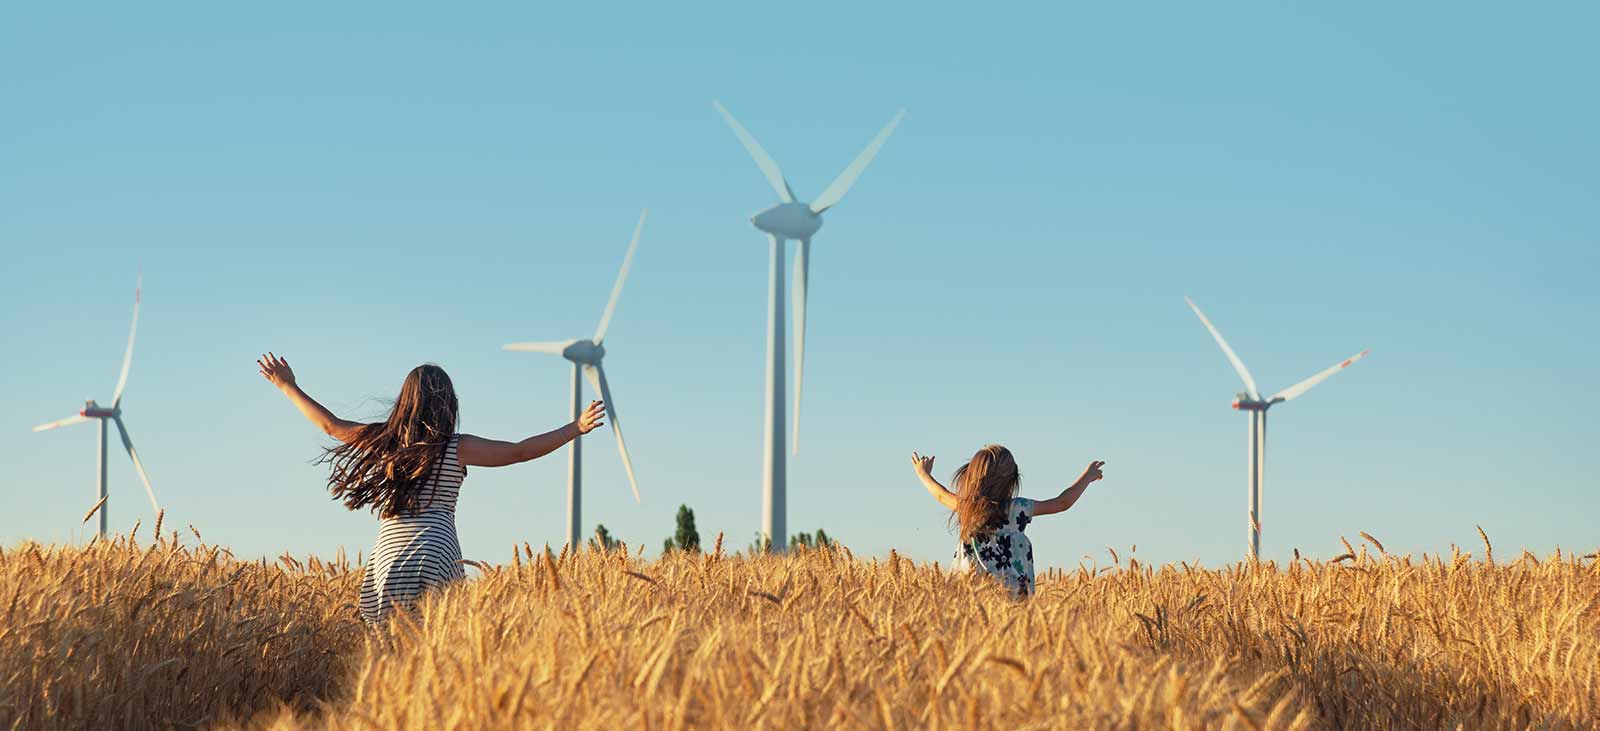 girls and wind turbines